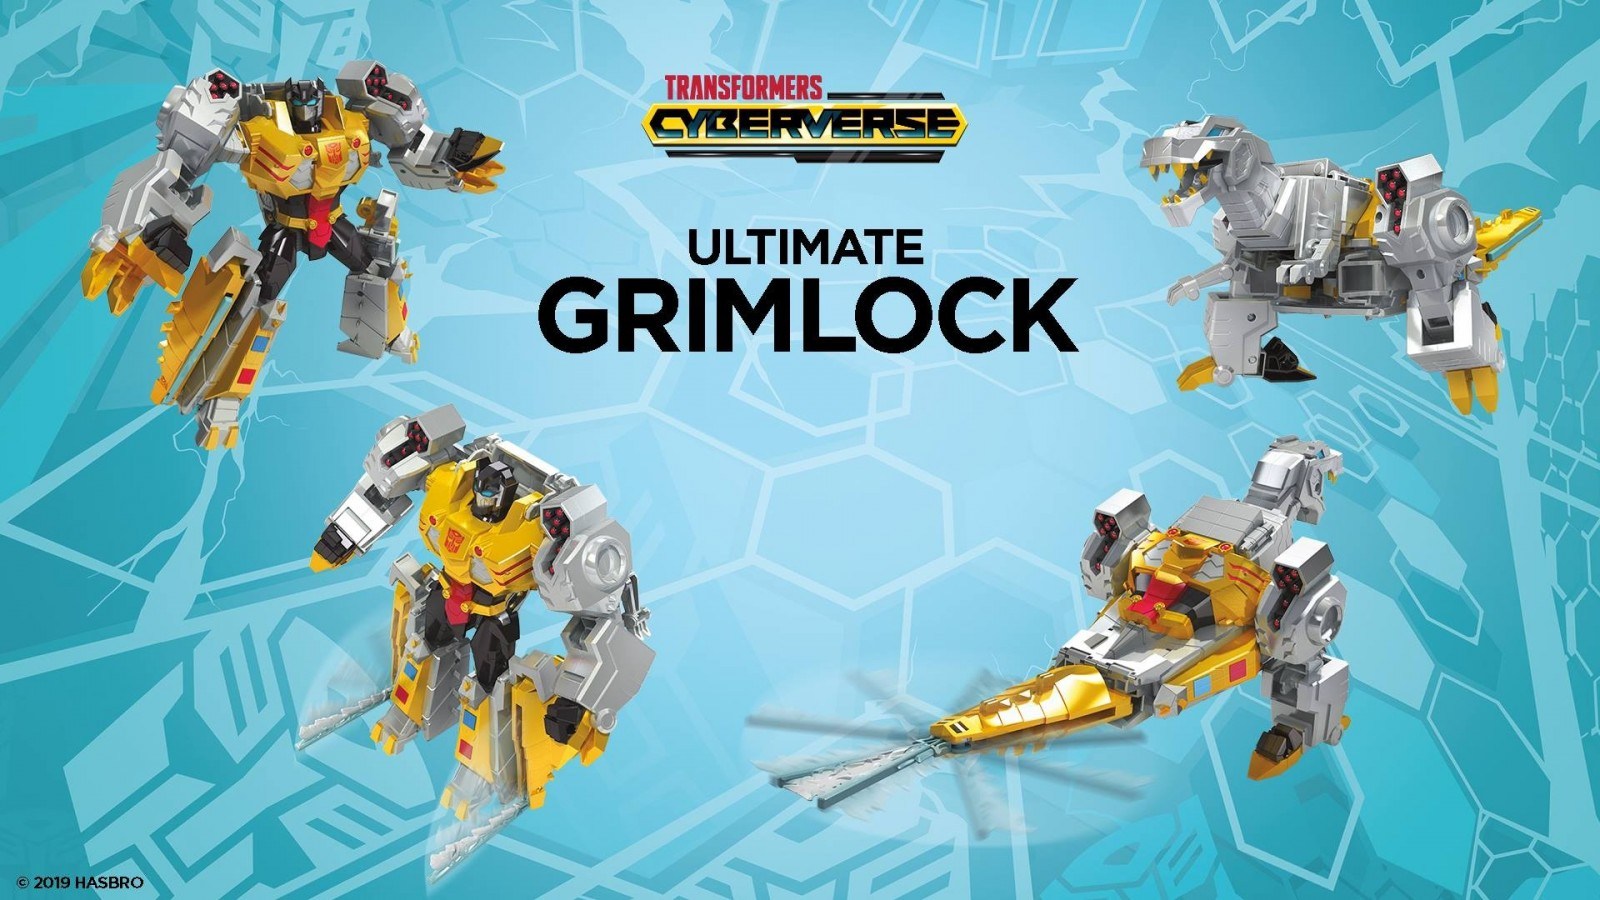 Cyberverse Ultimate Grimlock - Transformers Cyberverse Ultimate Class Grimlock , HD Wallpaper & Backgrounds